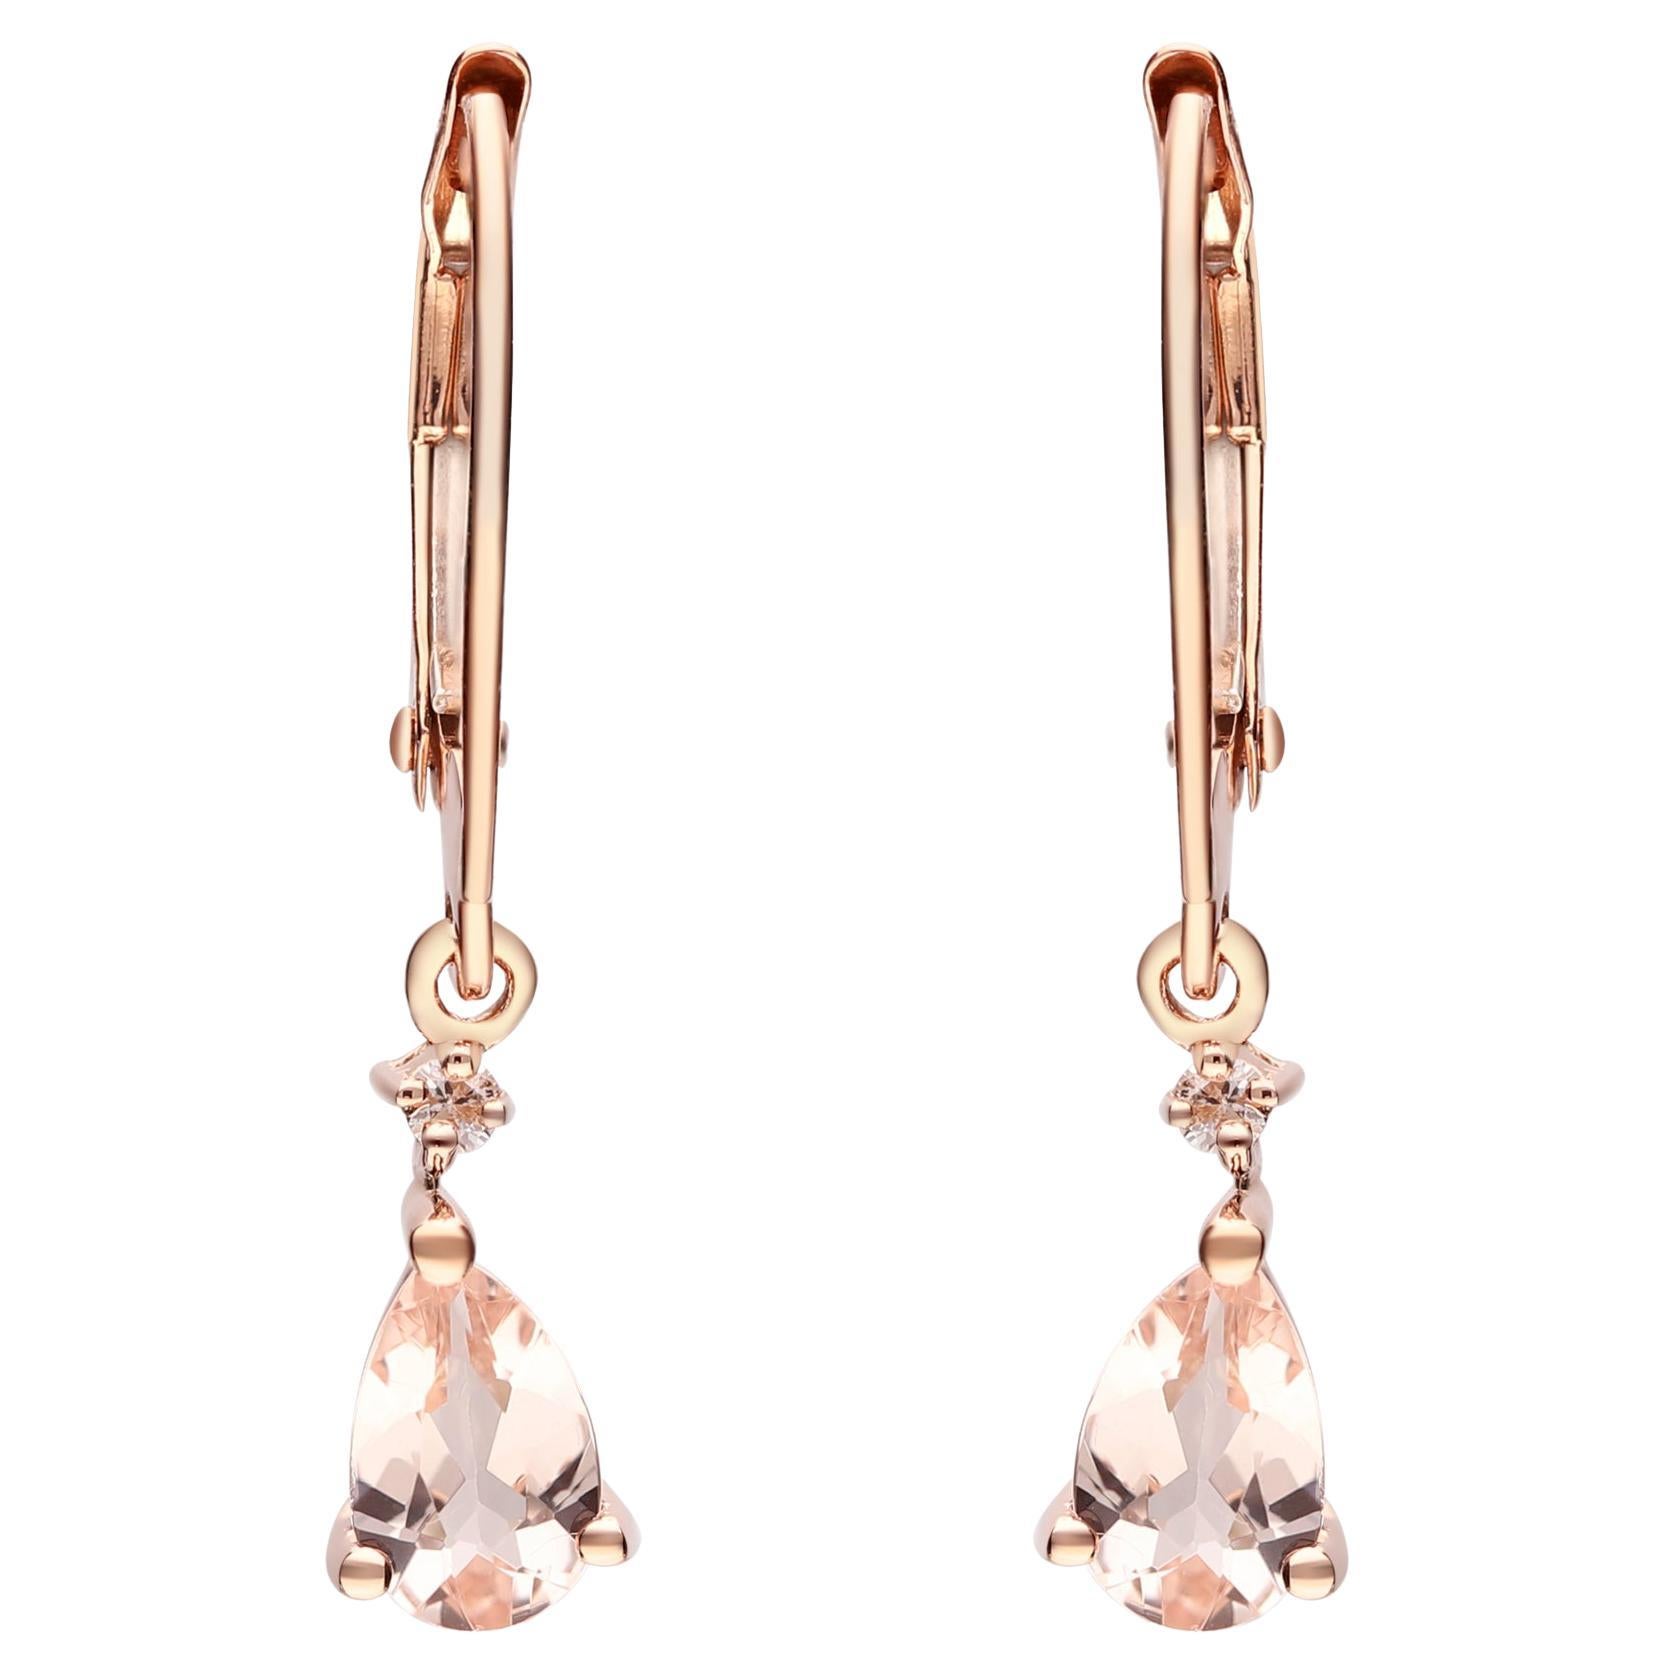 0.63 Carat Morganite Pear Cut Diamond Accents 14K Rose Gold Earring